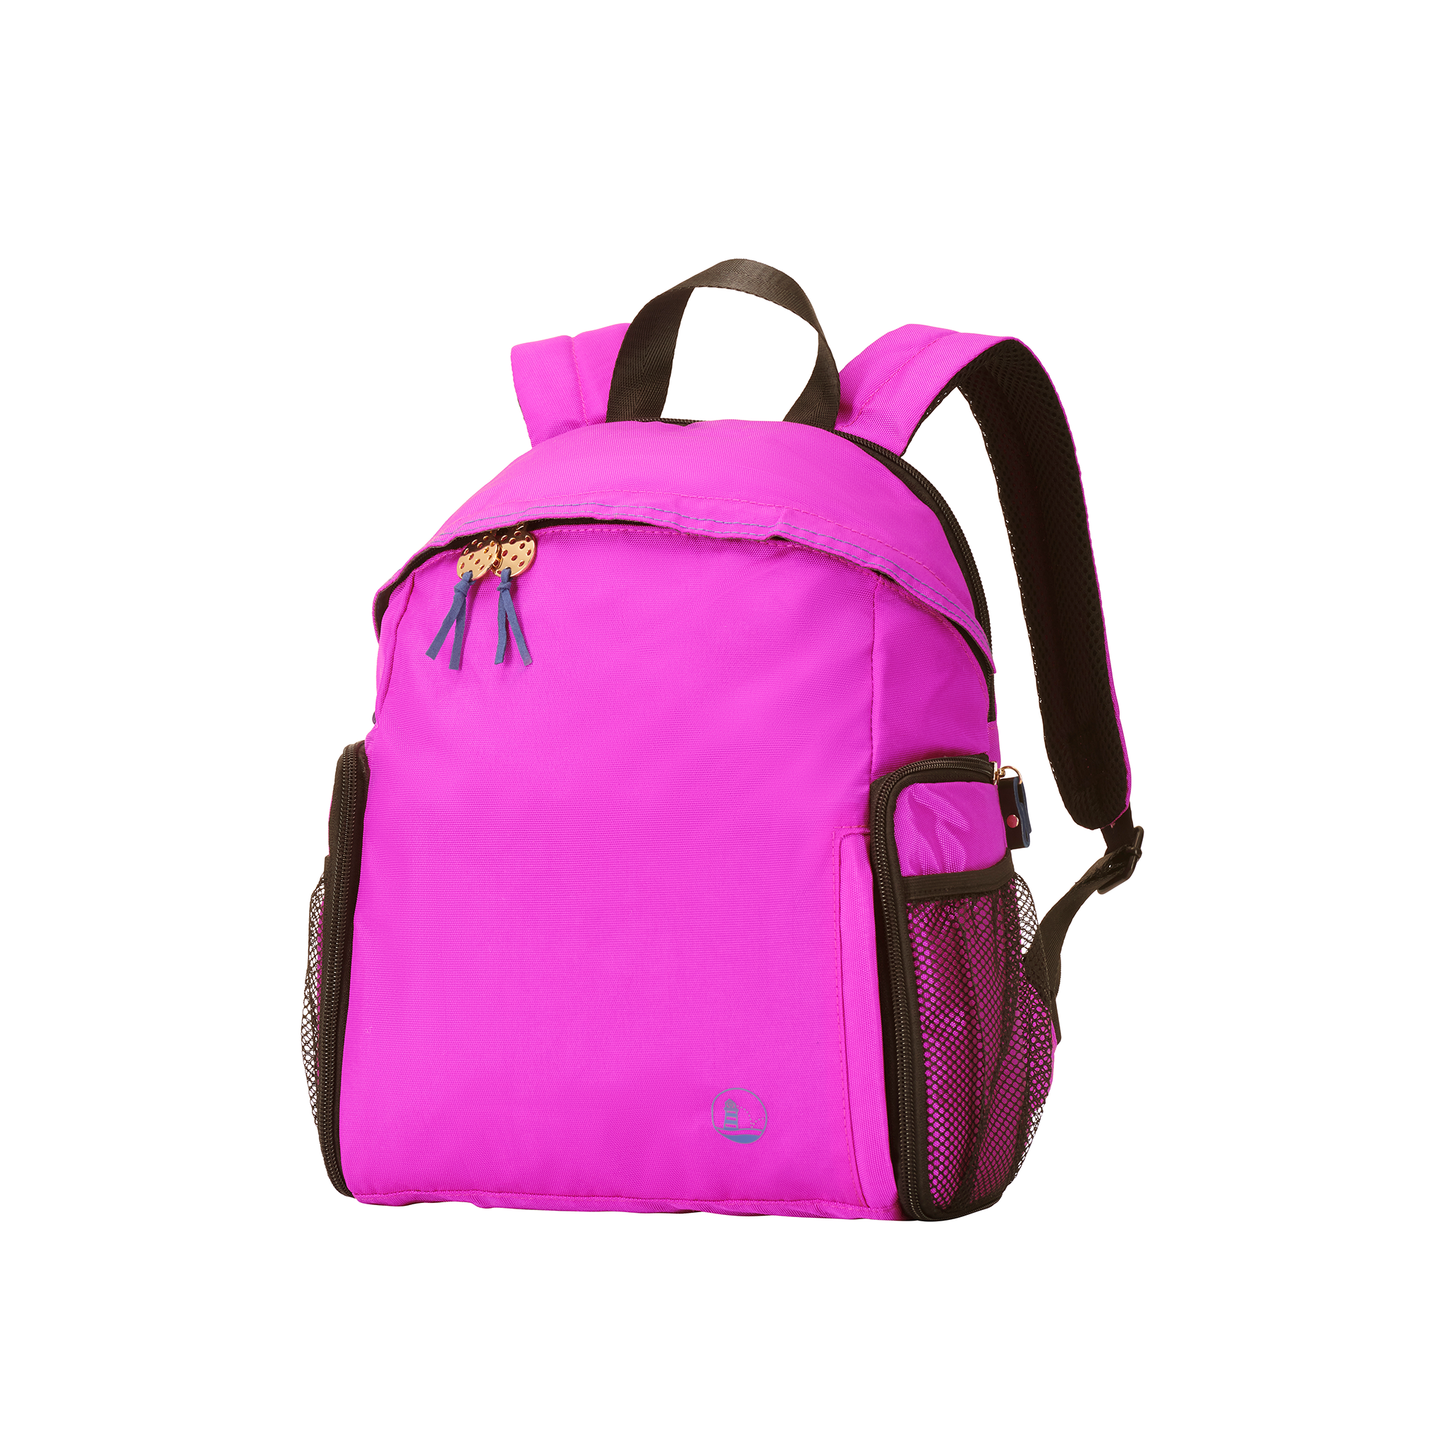 Women's designer Pickleball Backpack in pink with peri blue stitching & logo, elegant gold tone PB charm & zipper pulls